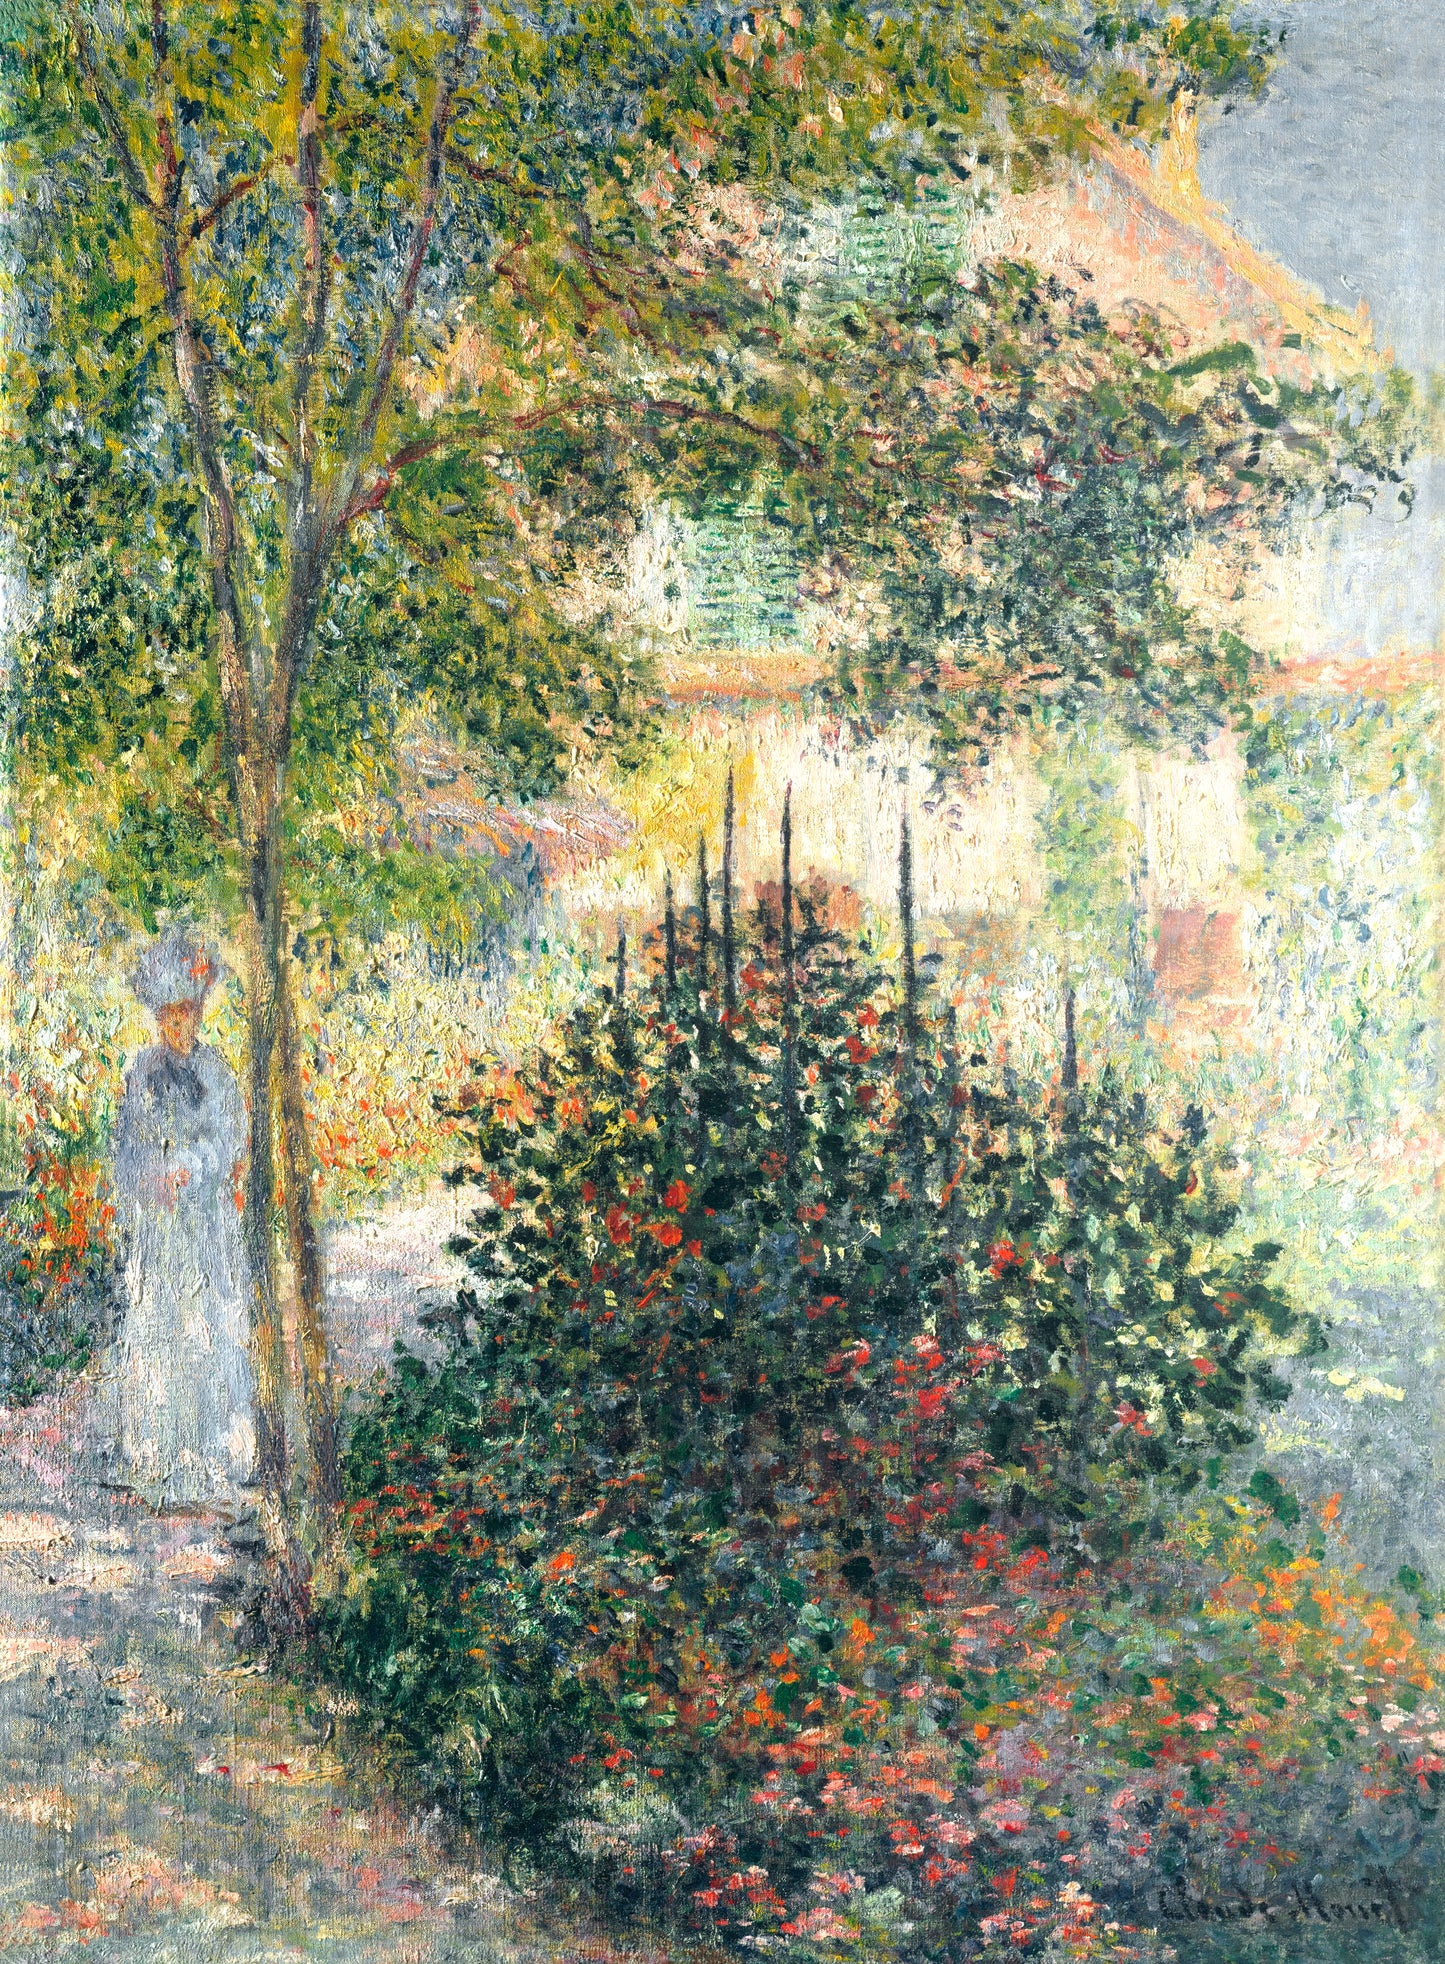 Claude Monet - Camille Monet in the Garden at Argenteuil 1876 - Digital Art - JPG File Download